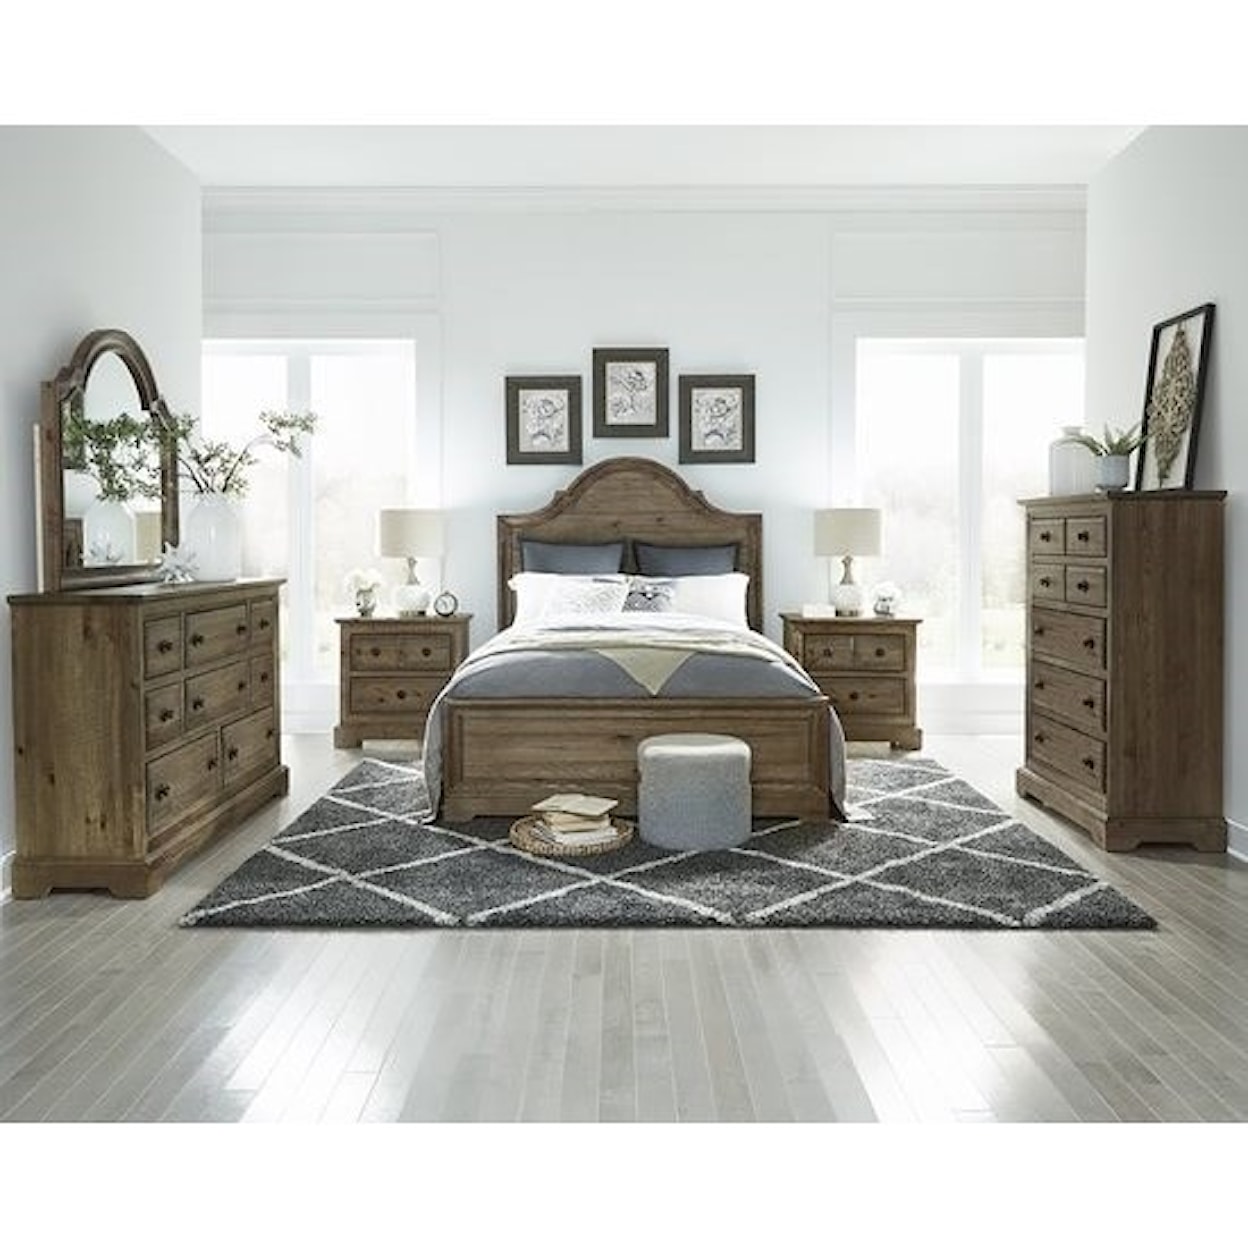 Progressive Furniture Wildfire King Bedroom Group